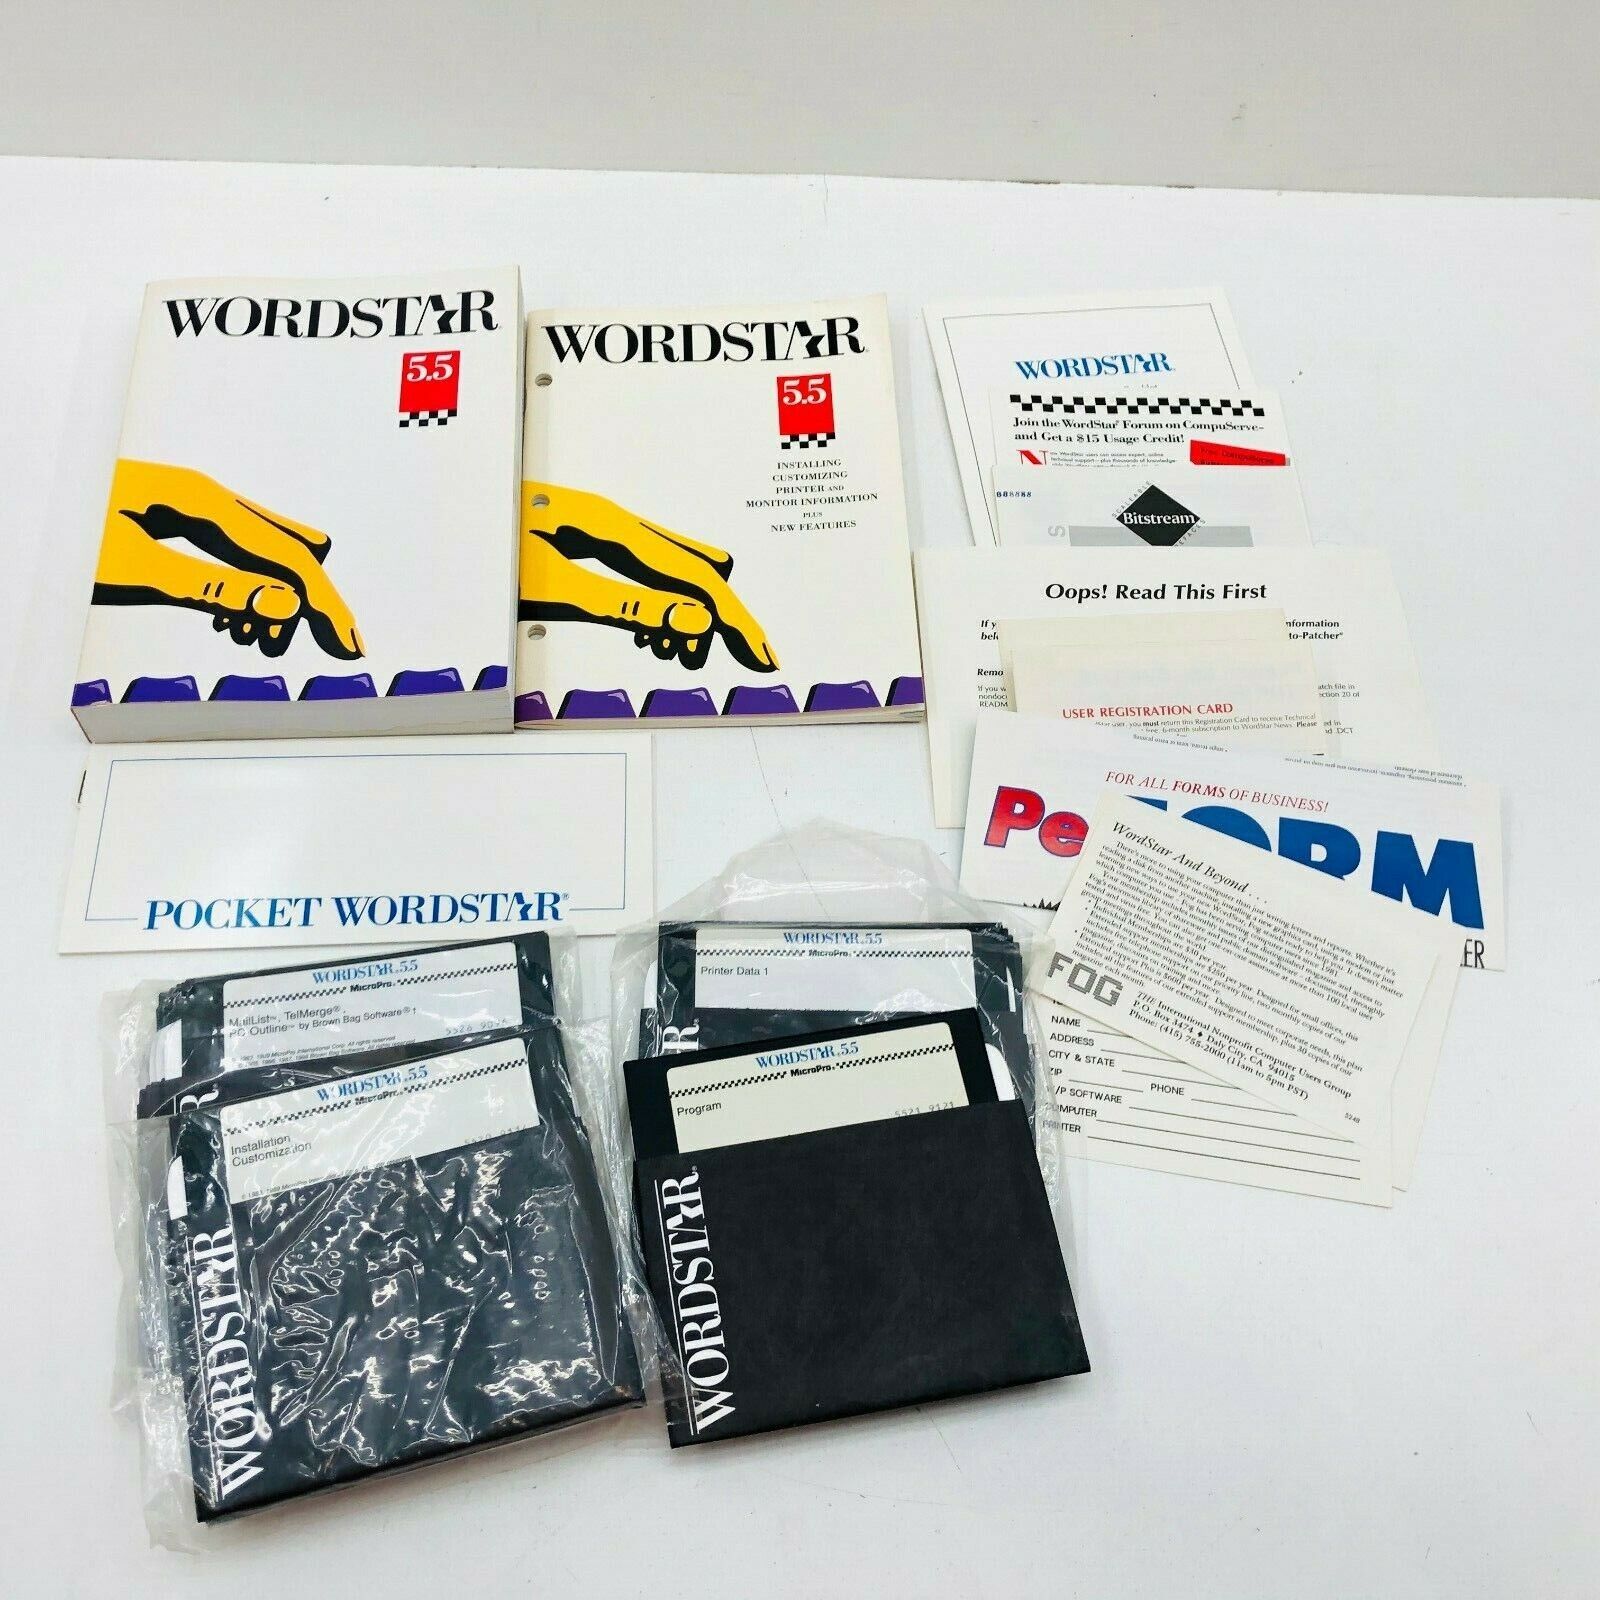 WORDSTAR 5.5. PC Computer Floppy Disk Software Books Original Paperwork VTG 1989